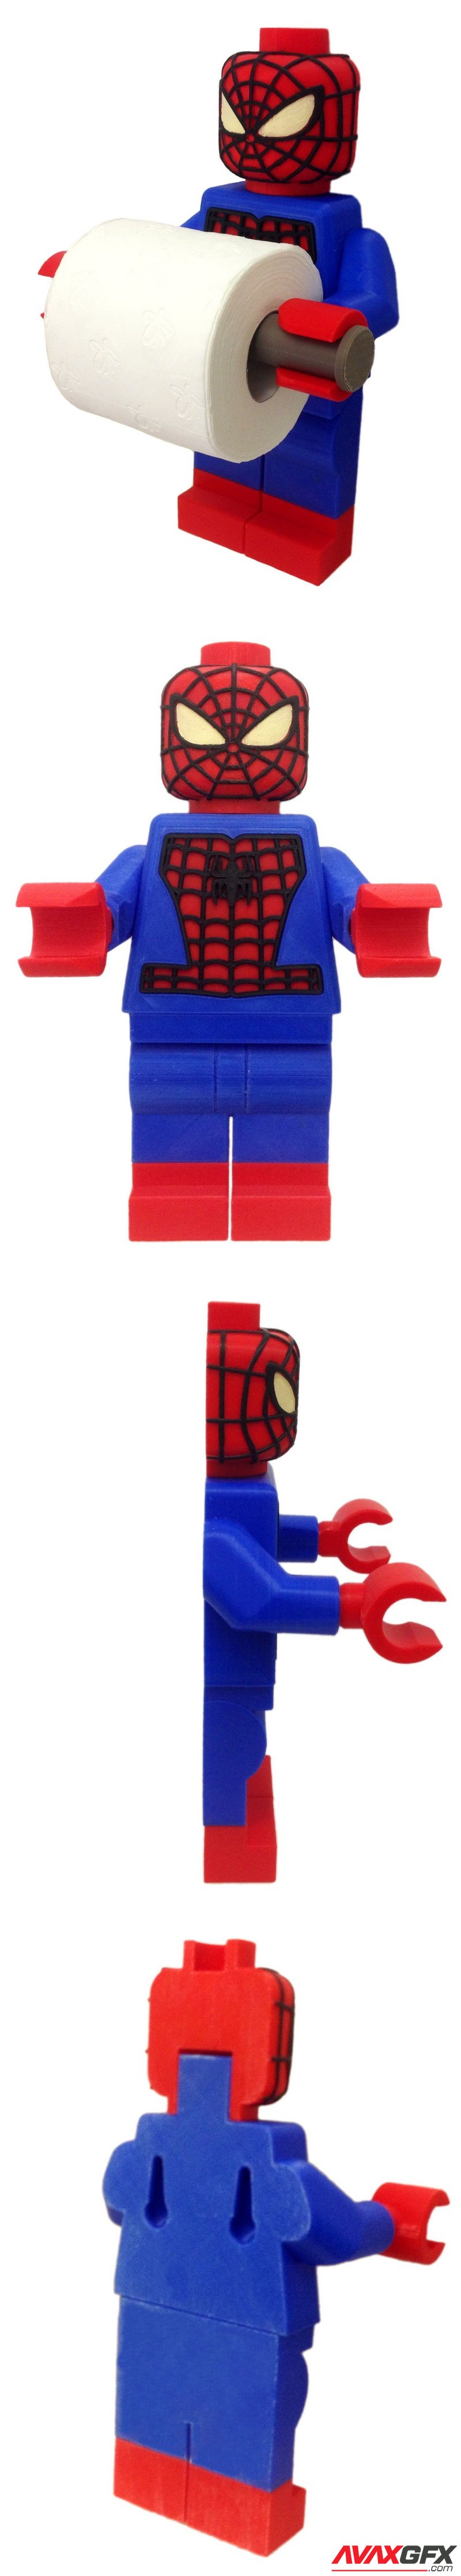 Lego Spider-Man Toilet Paper Holder